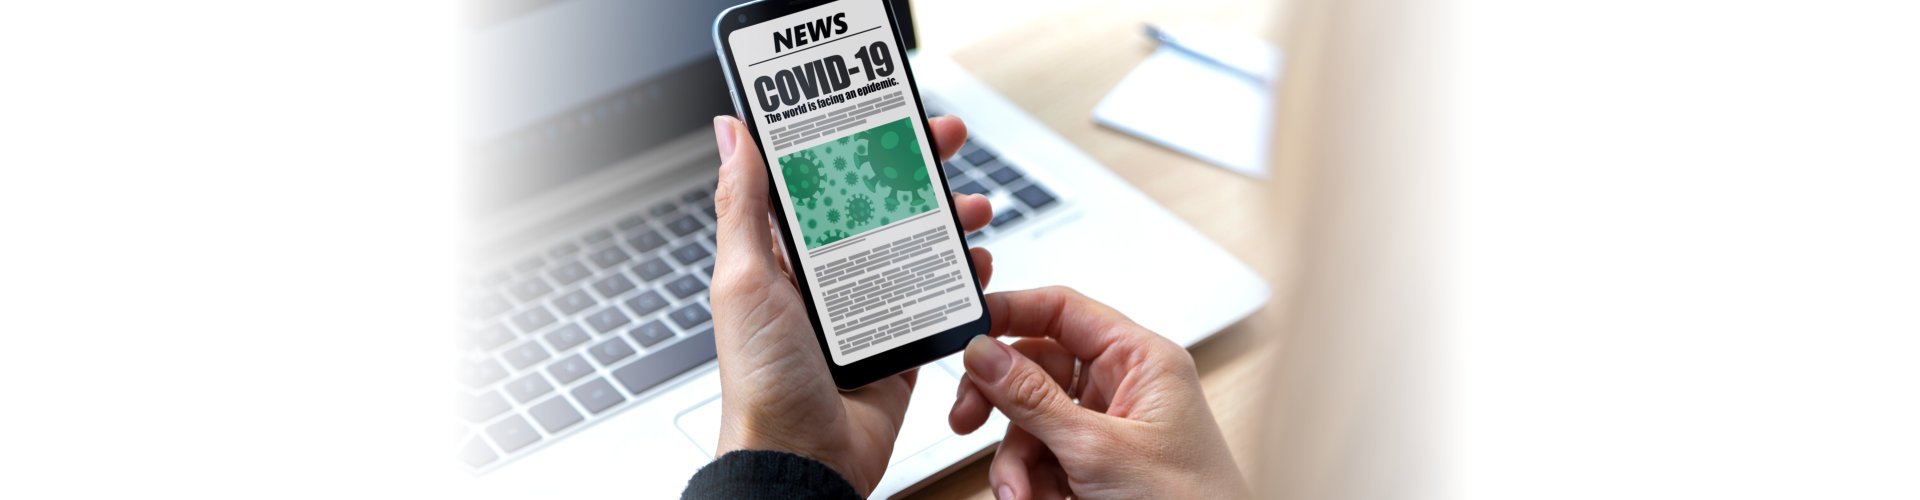 covid news on a smartphone